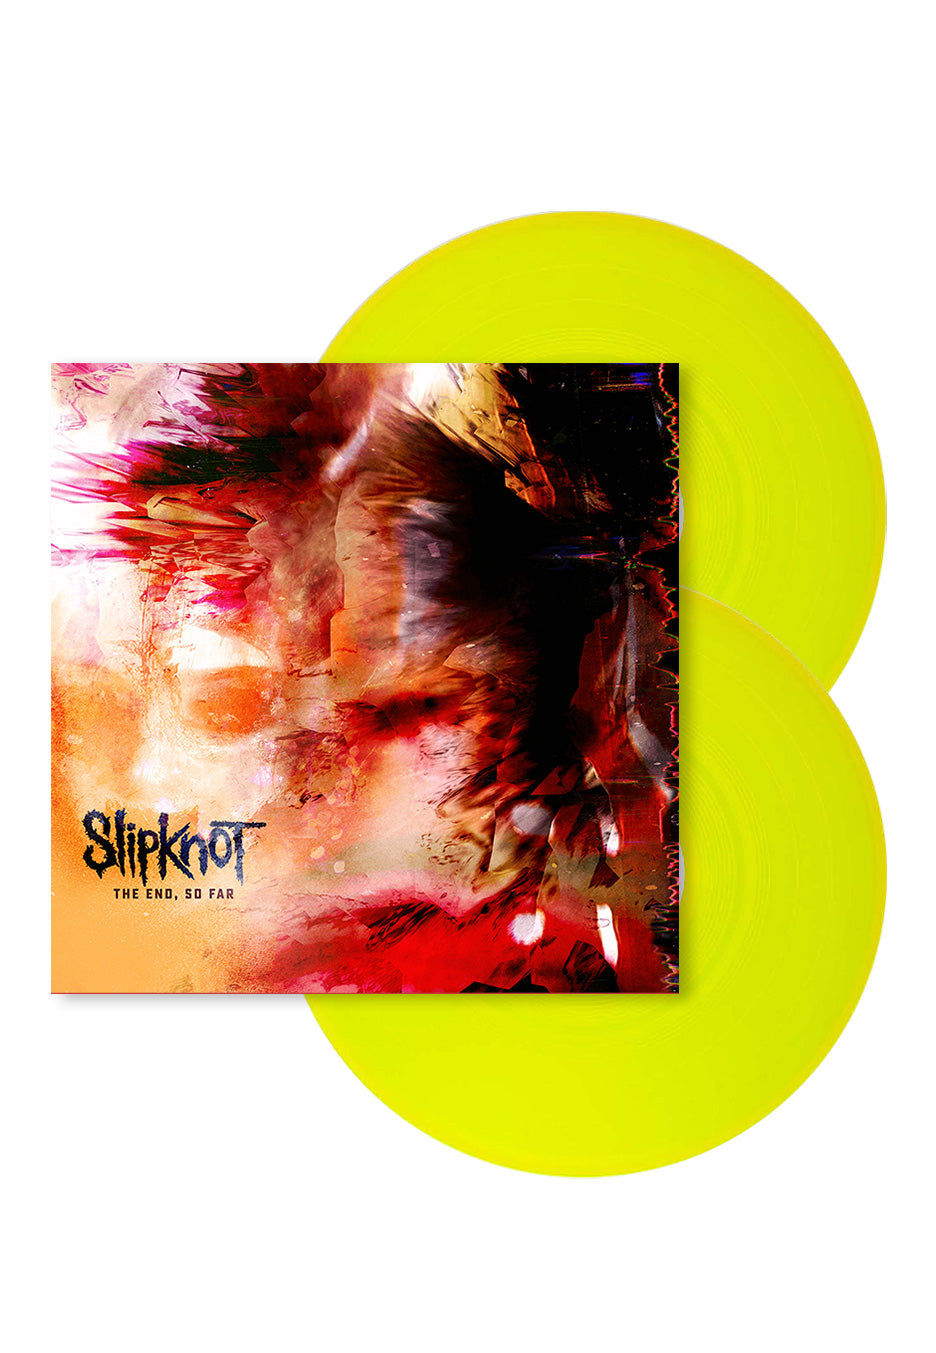 Slipknot - The End, So Far Ltd. Neon Yellow - Colored 2 Vinyl